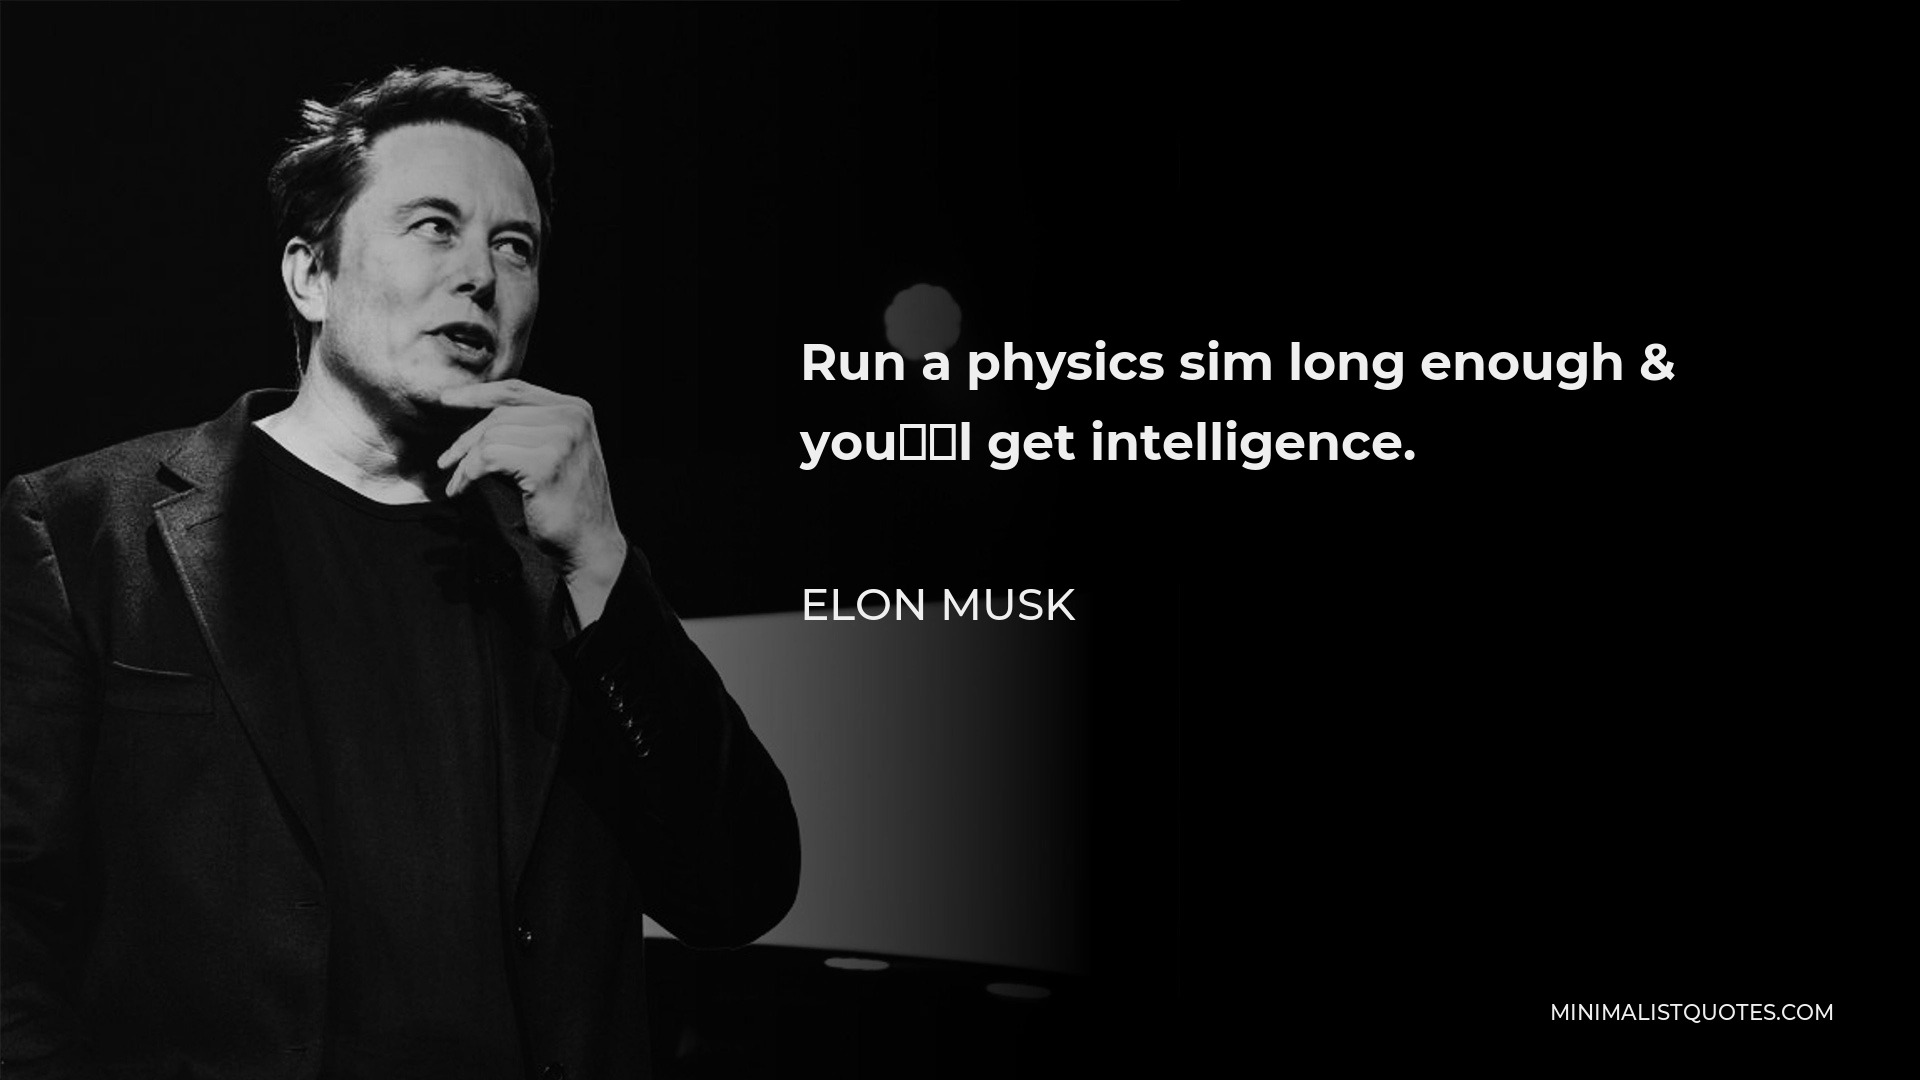 Elon Musk Quote - Run a physics sim long enough & you’ll get intelligence.